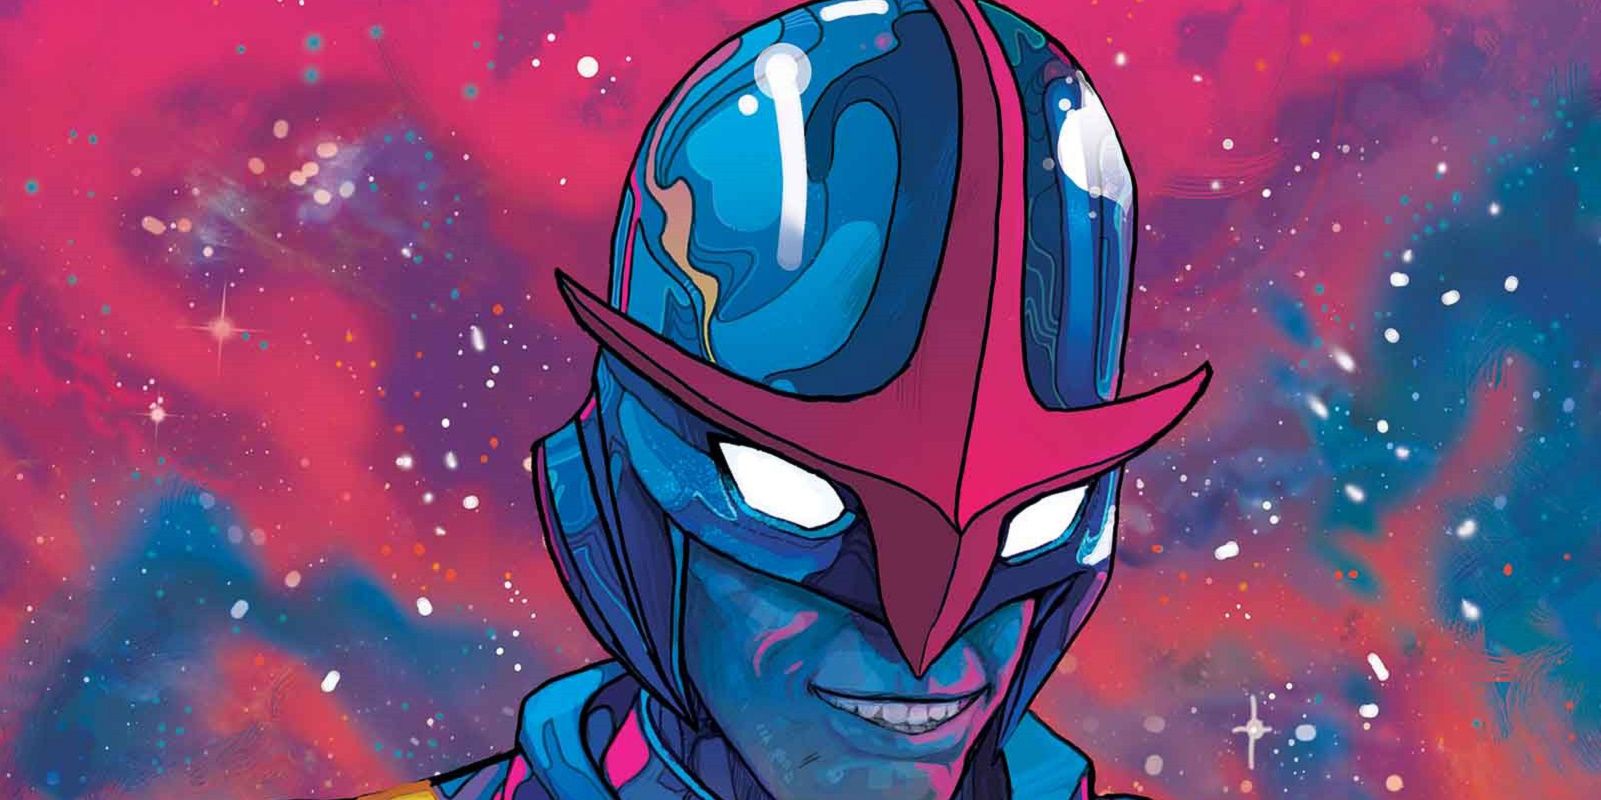 Marvel’s Original Nova Richard Rider Adjusts to Life After Death